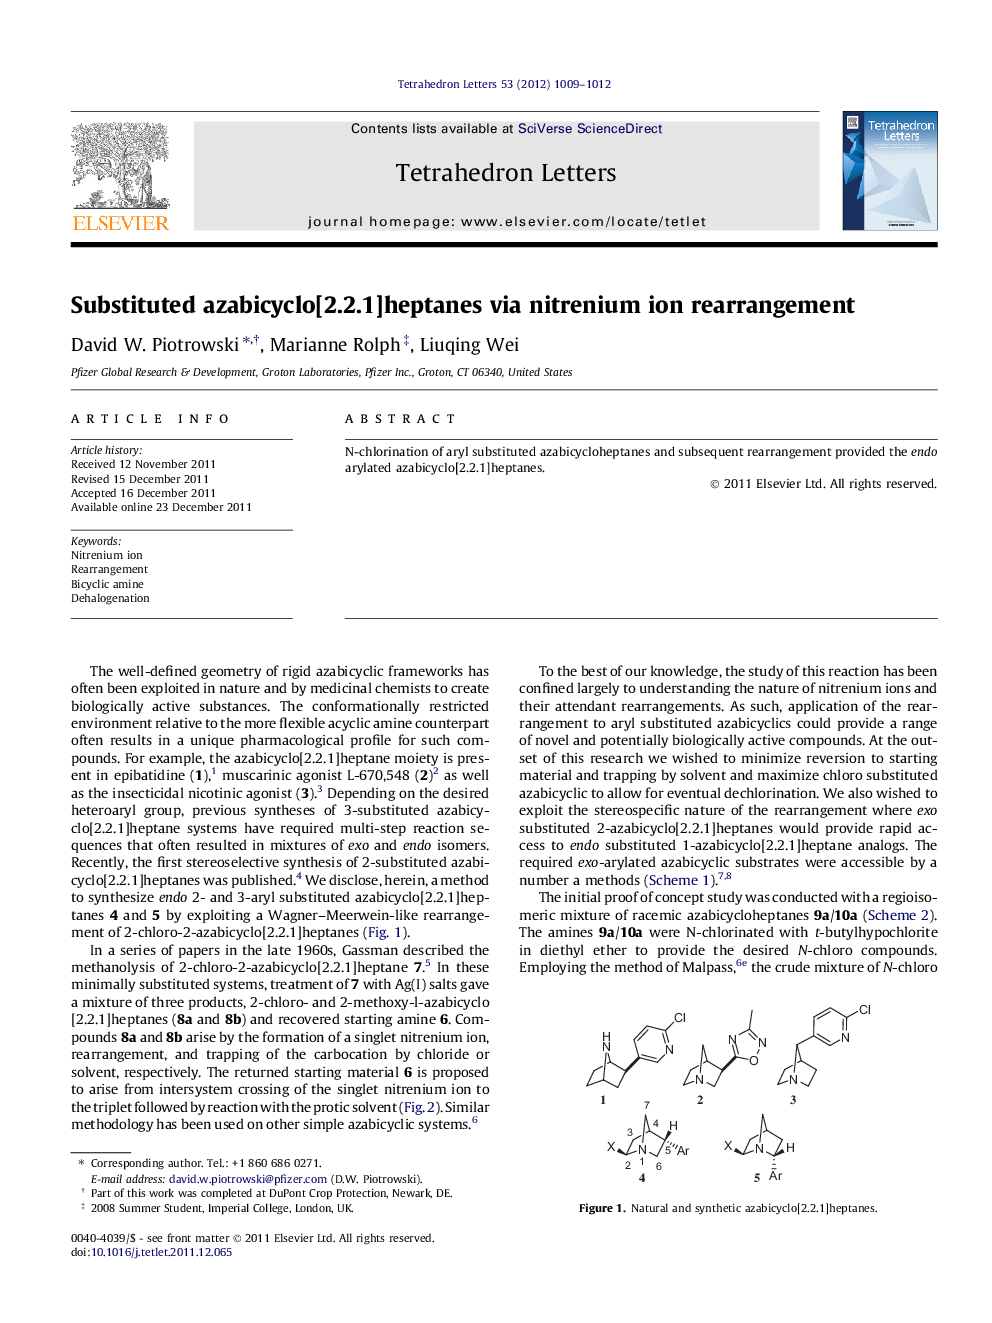 Substituted azabicyclo[2.2.1]heptanes via nitrenium ion rearrangement